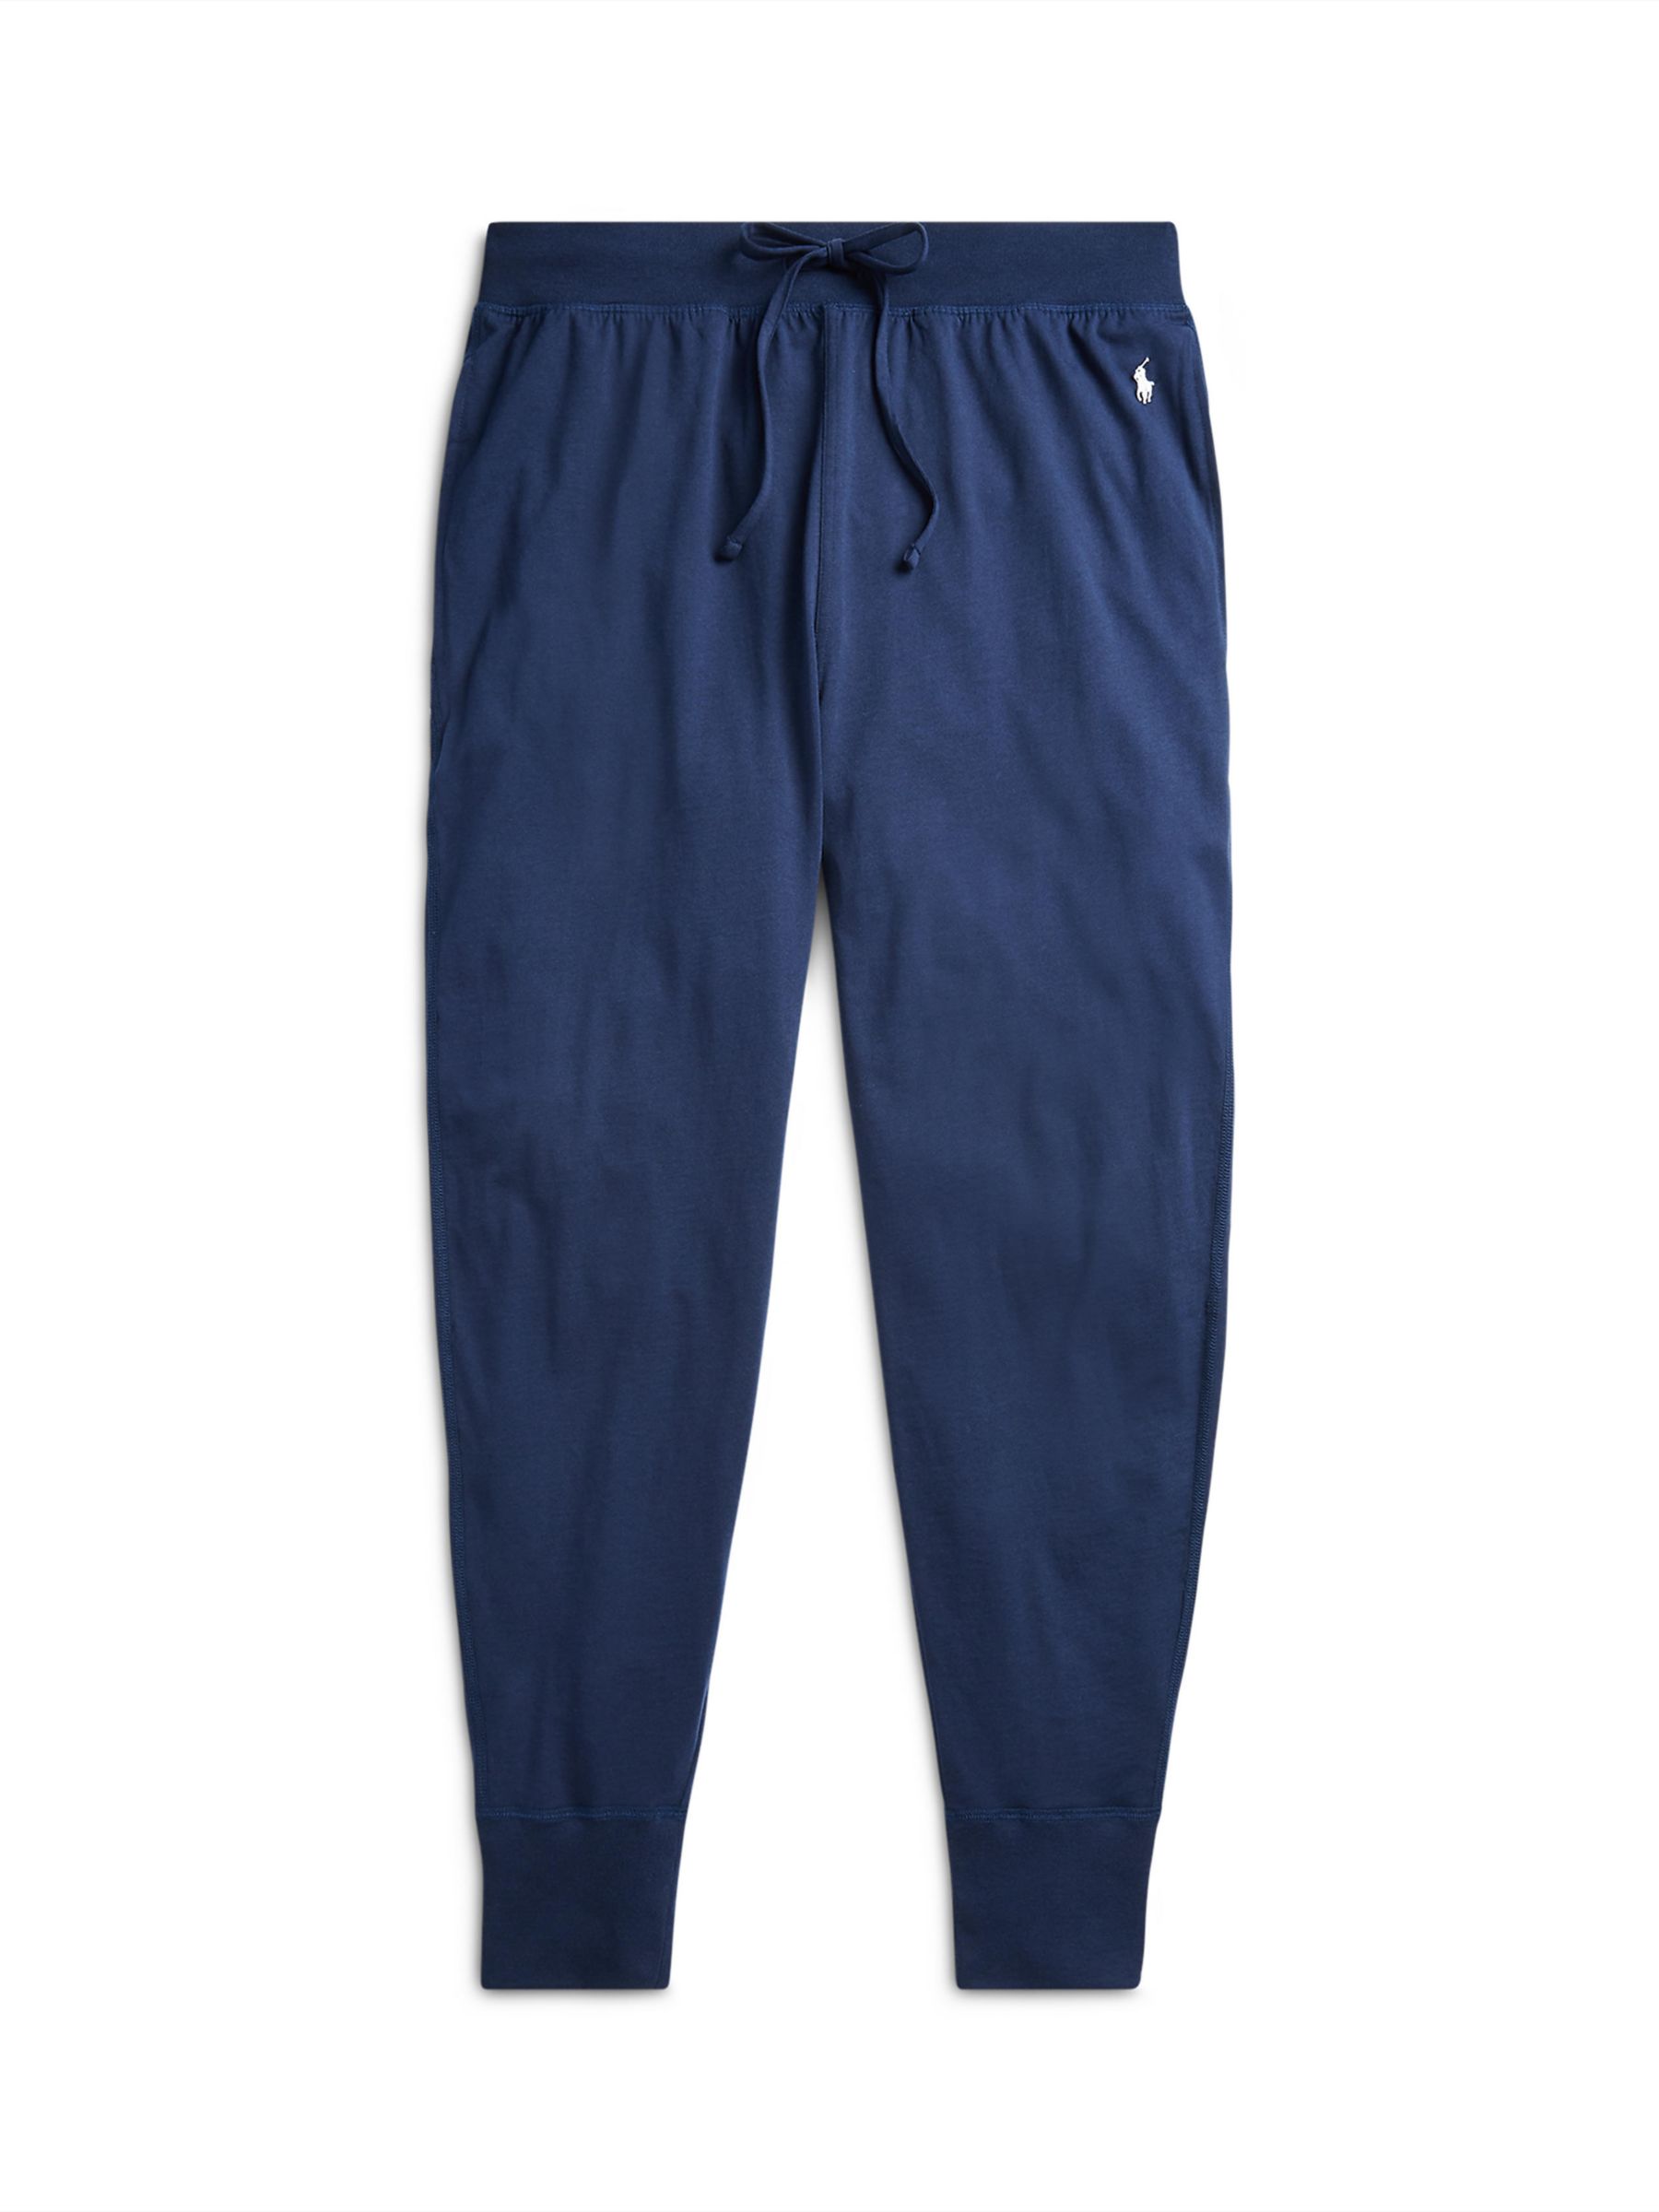 Ralph Lauren Liquid Cotton Pyjama Pants, Blue at John Lewis & Partners